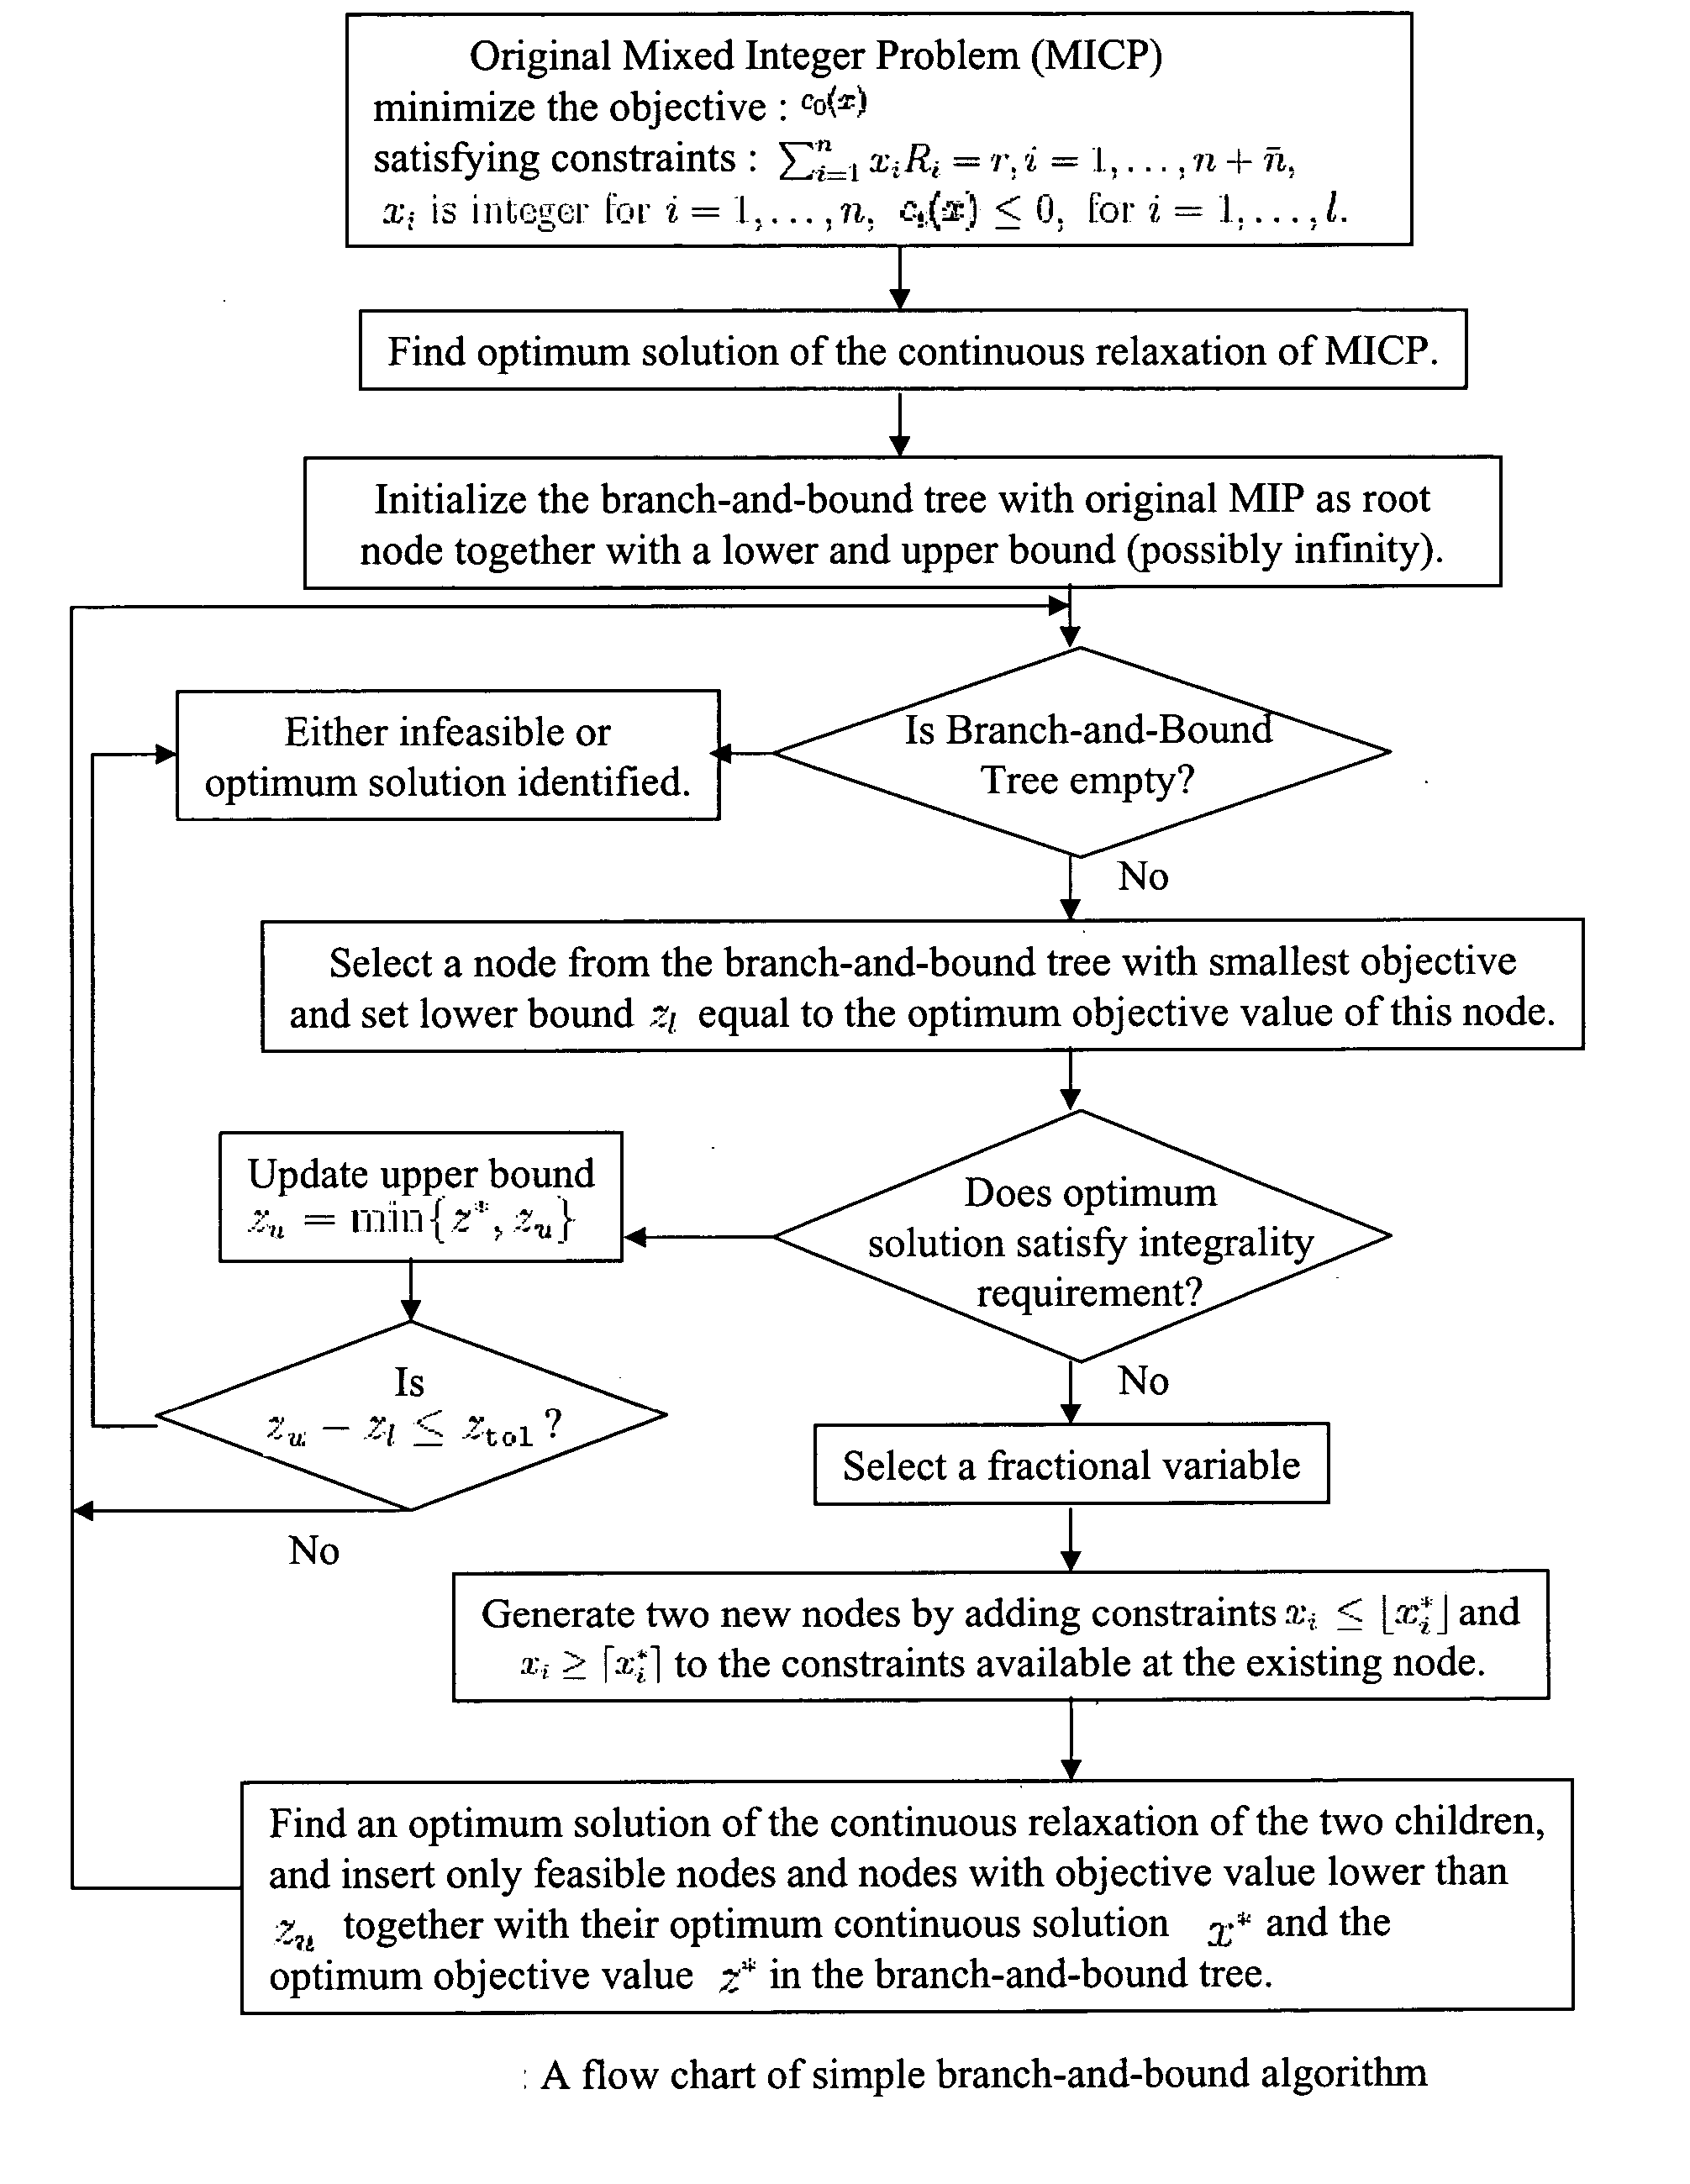 Generalized branching methods for mixed integer programming